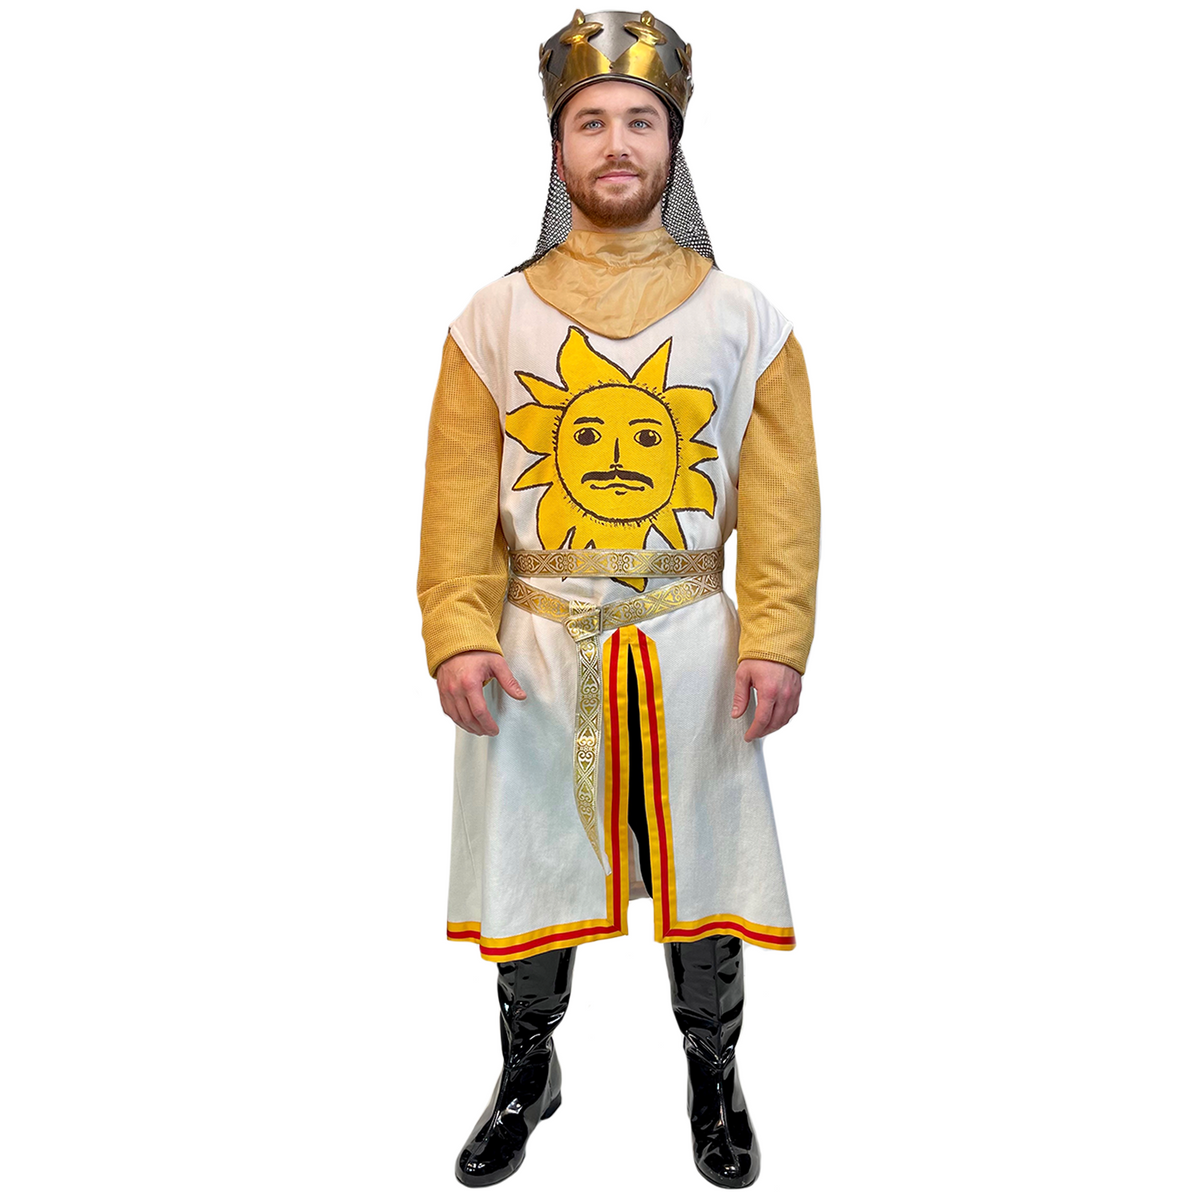 Exclusive Medieval Men Monty Python King Arthur Adult Costume